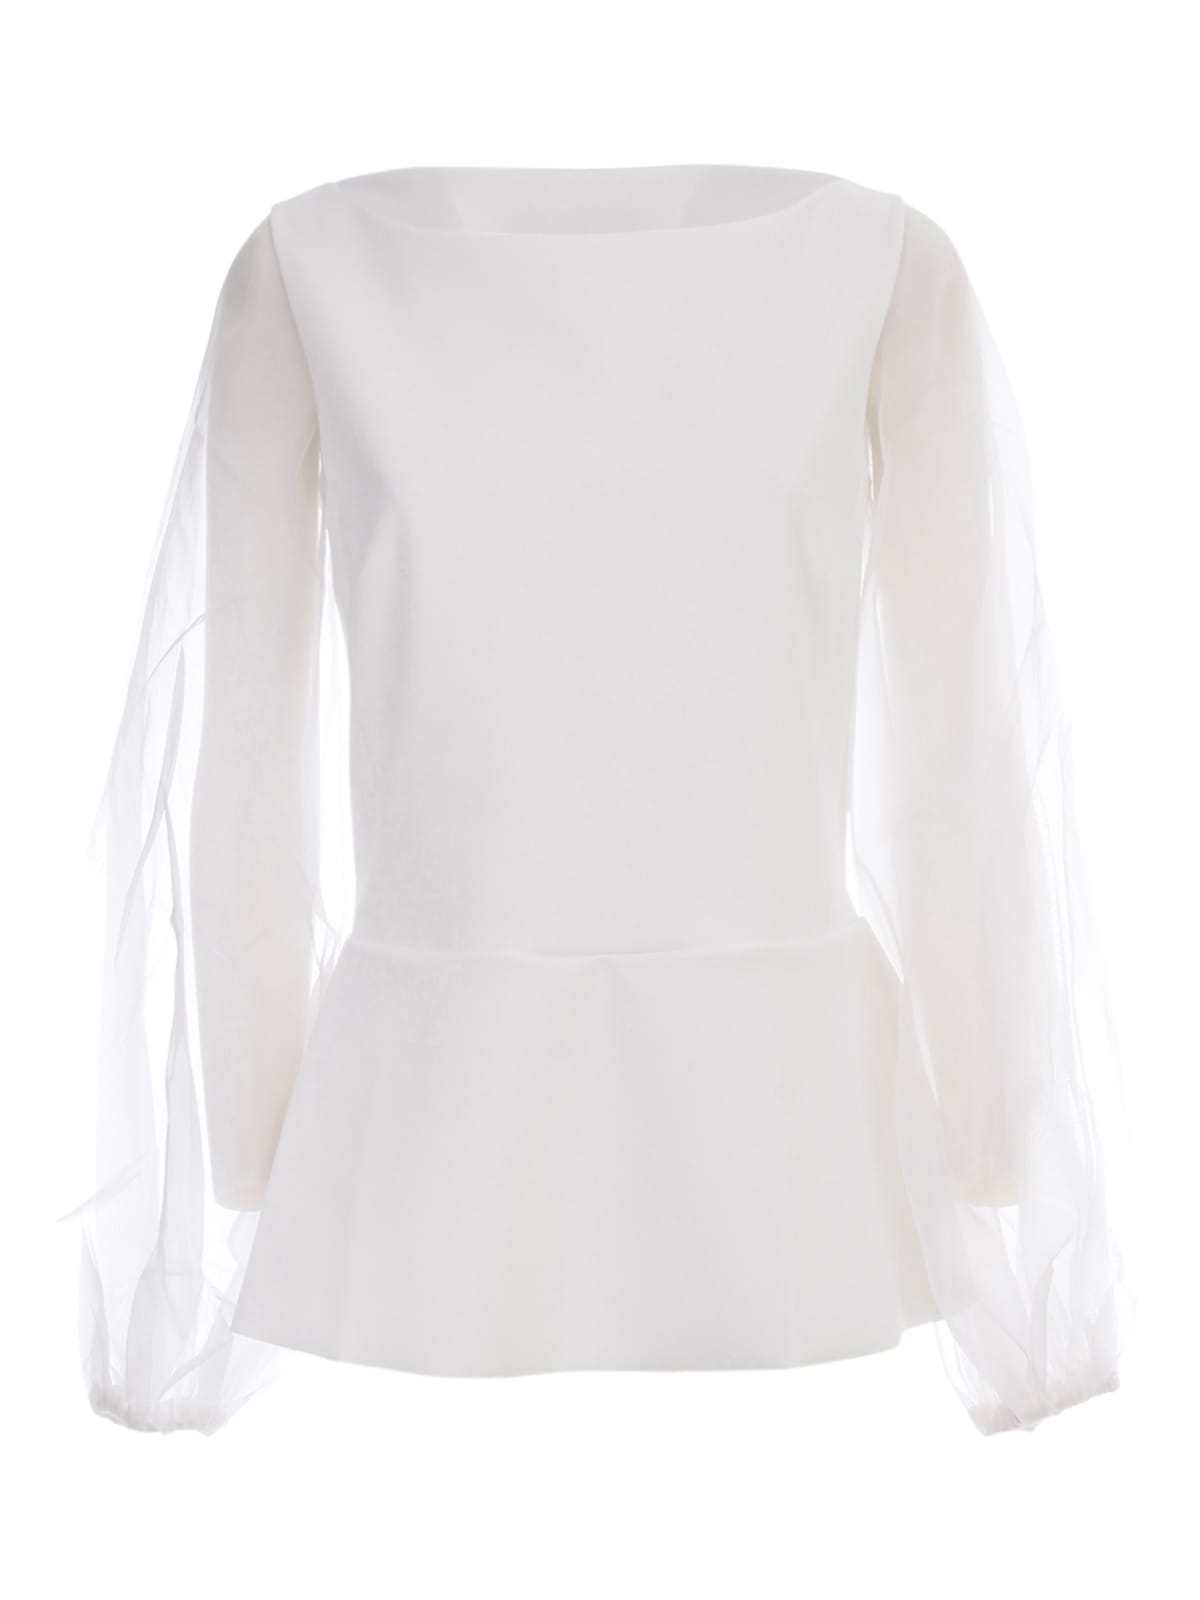 La Petit Robe Di Chiara Boni Top Voille Sleeve In White